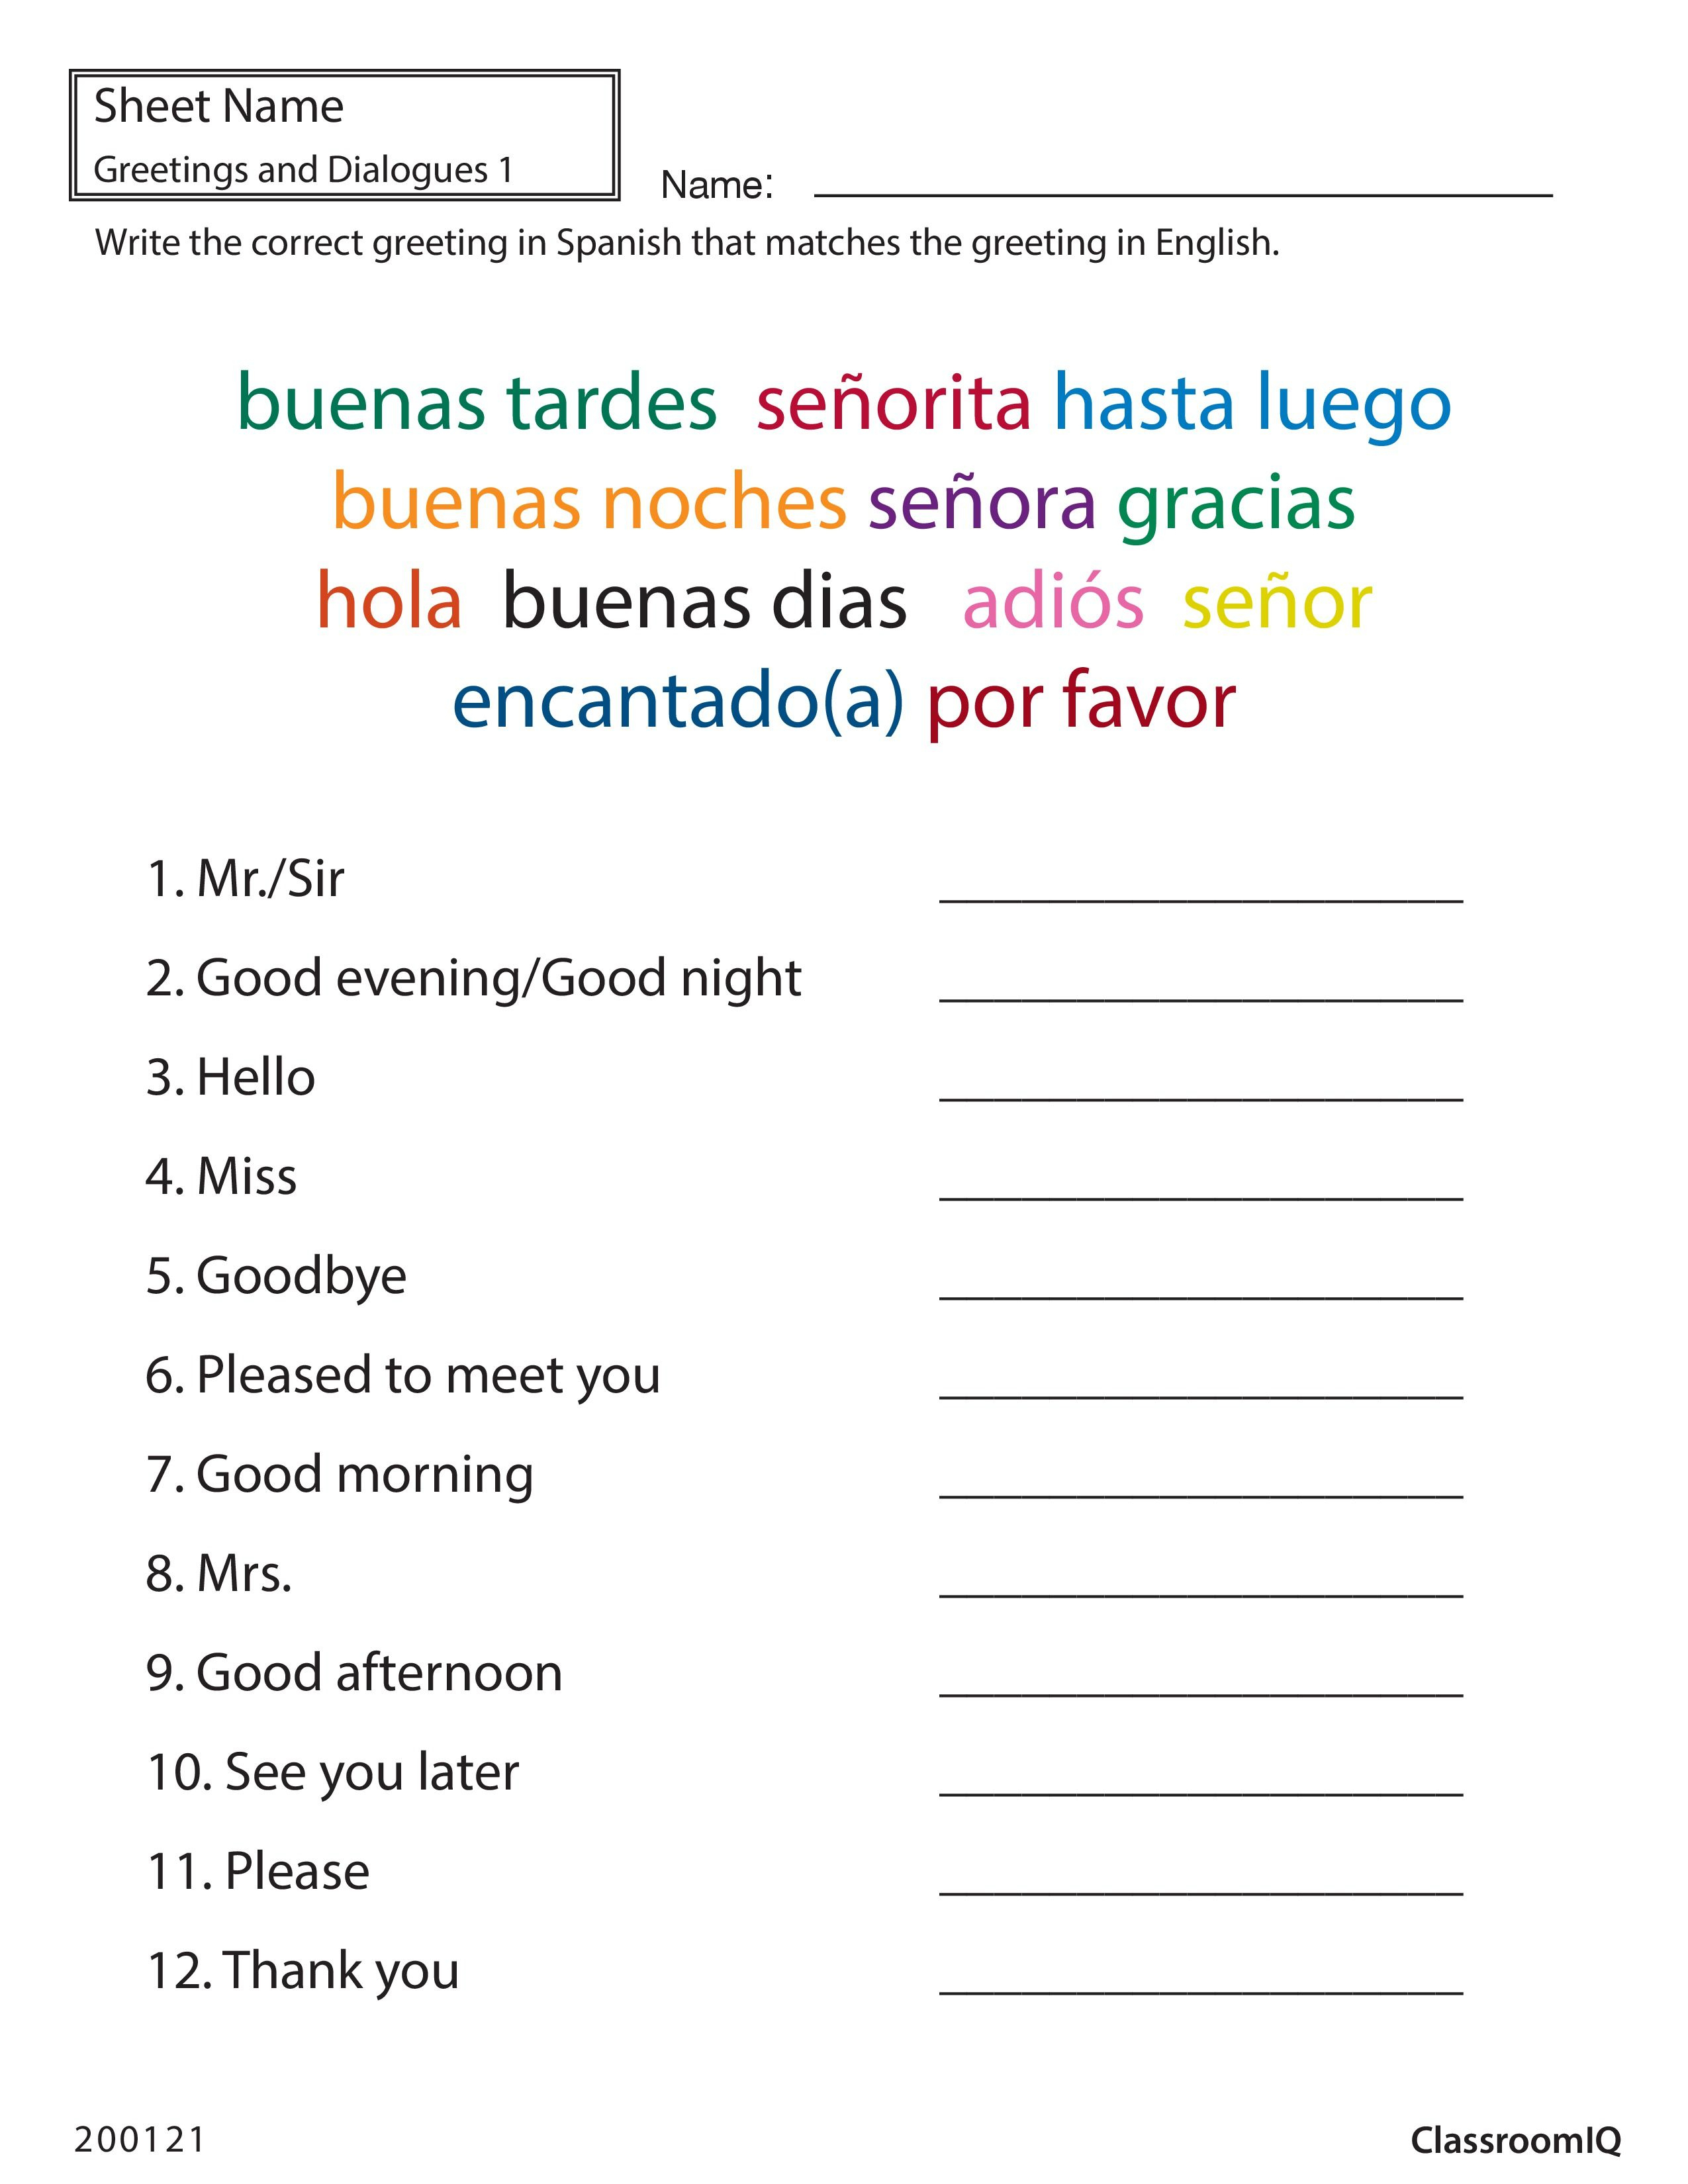 Spanish Greetings Matching #classroomiq #spanishworksheets - Free Printable Elementary Spanish Worksheets